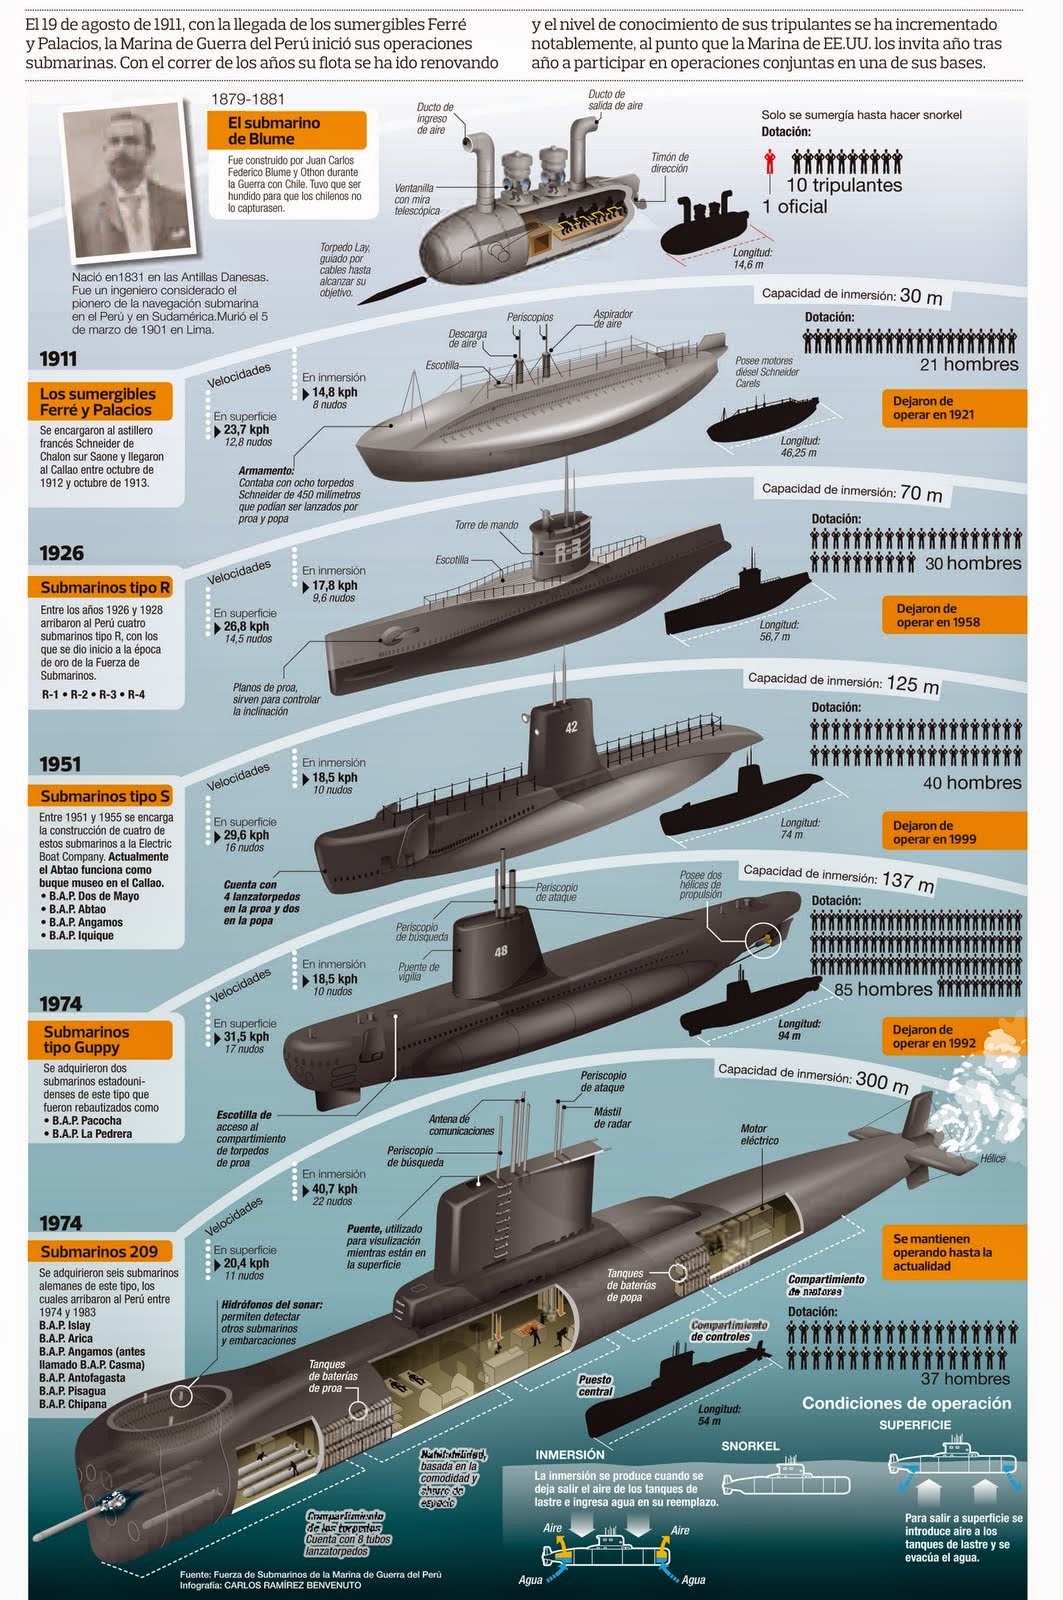 Spanish Defense Commitments – Navy